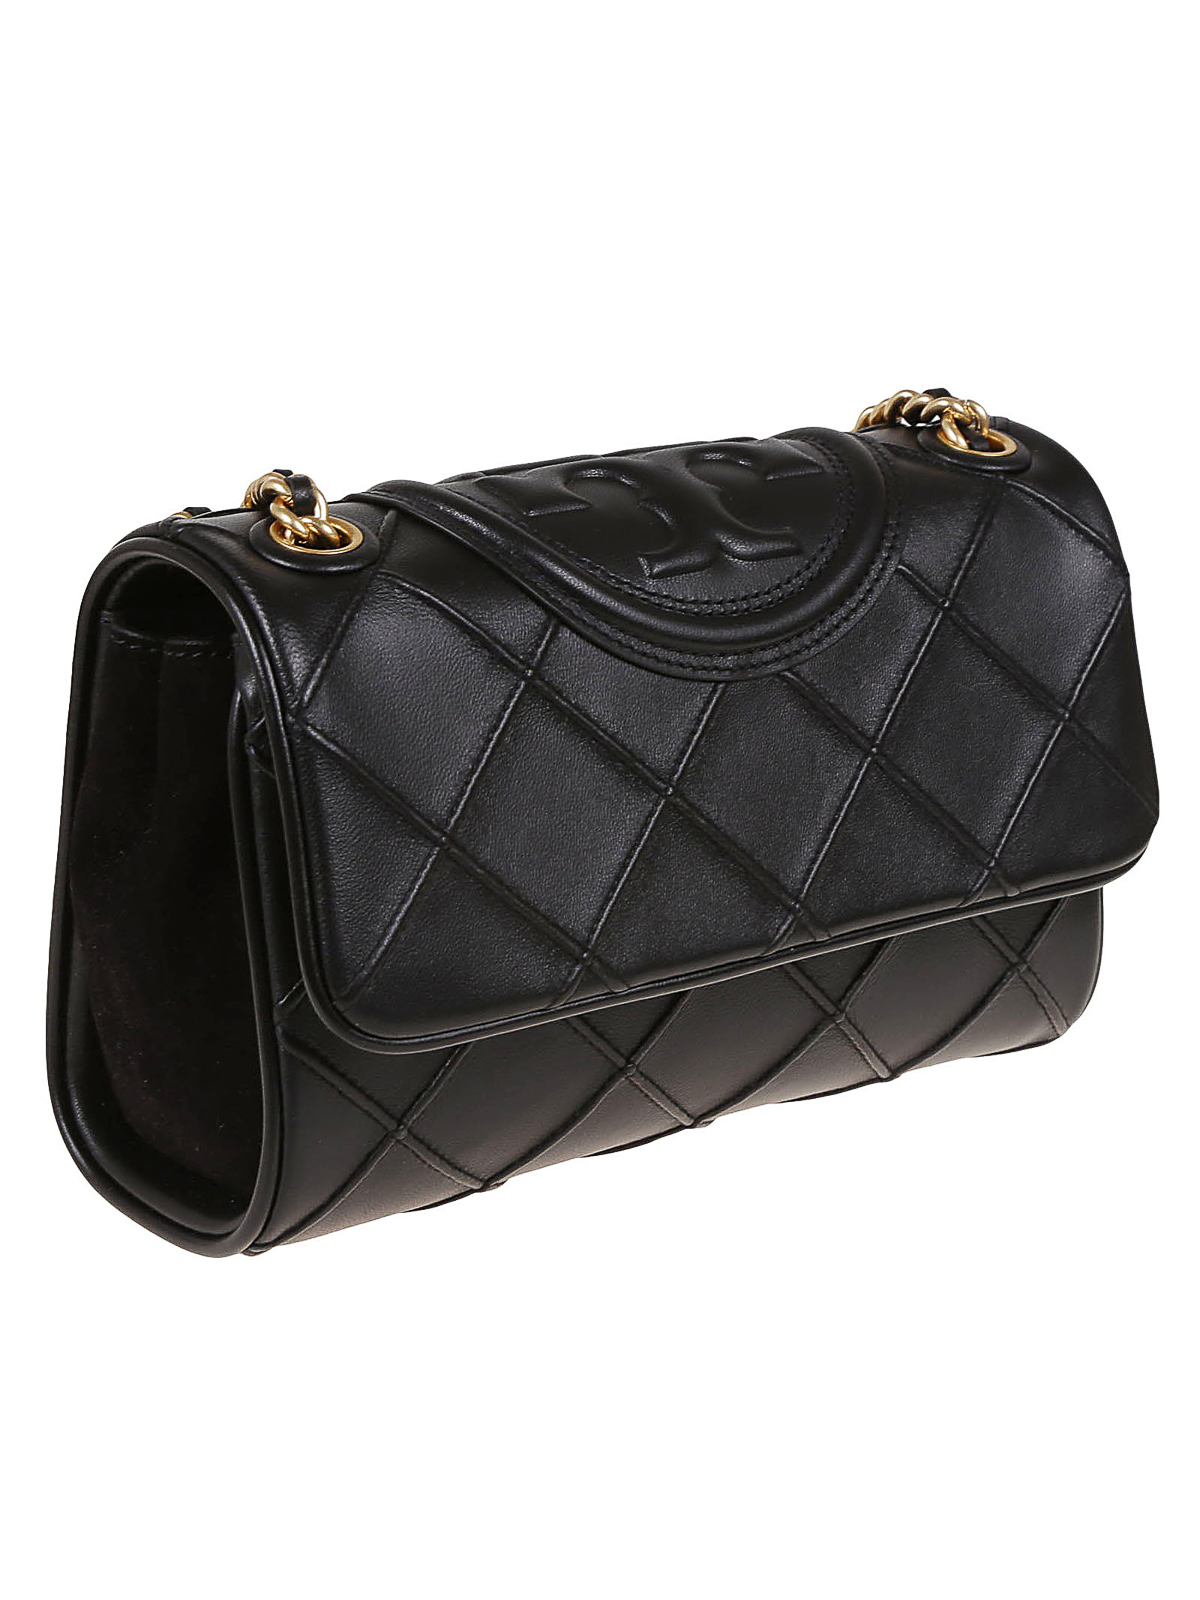 Tory Burch Women's Fleming Convertible Shoulder Bag, Black, One Size:  Handbags